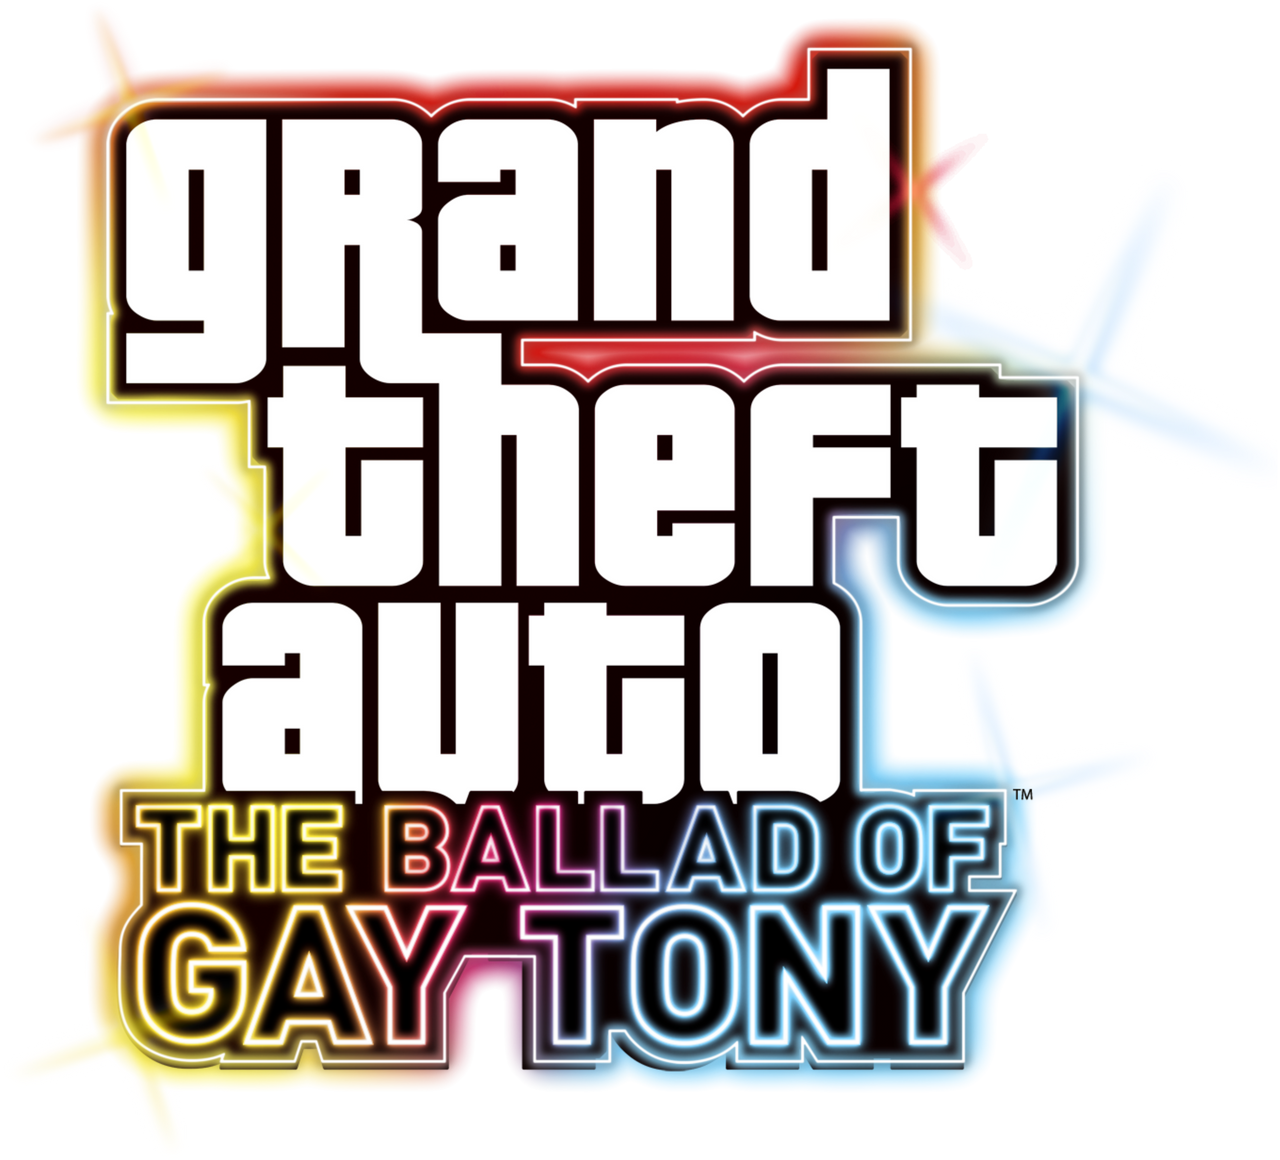 Grand Theft Auto Liberty City Stories Logo by sezaibey on DeviantArt